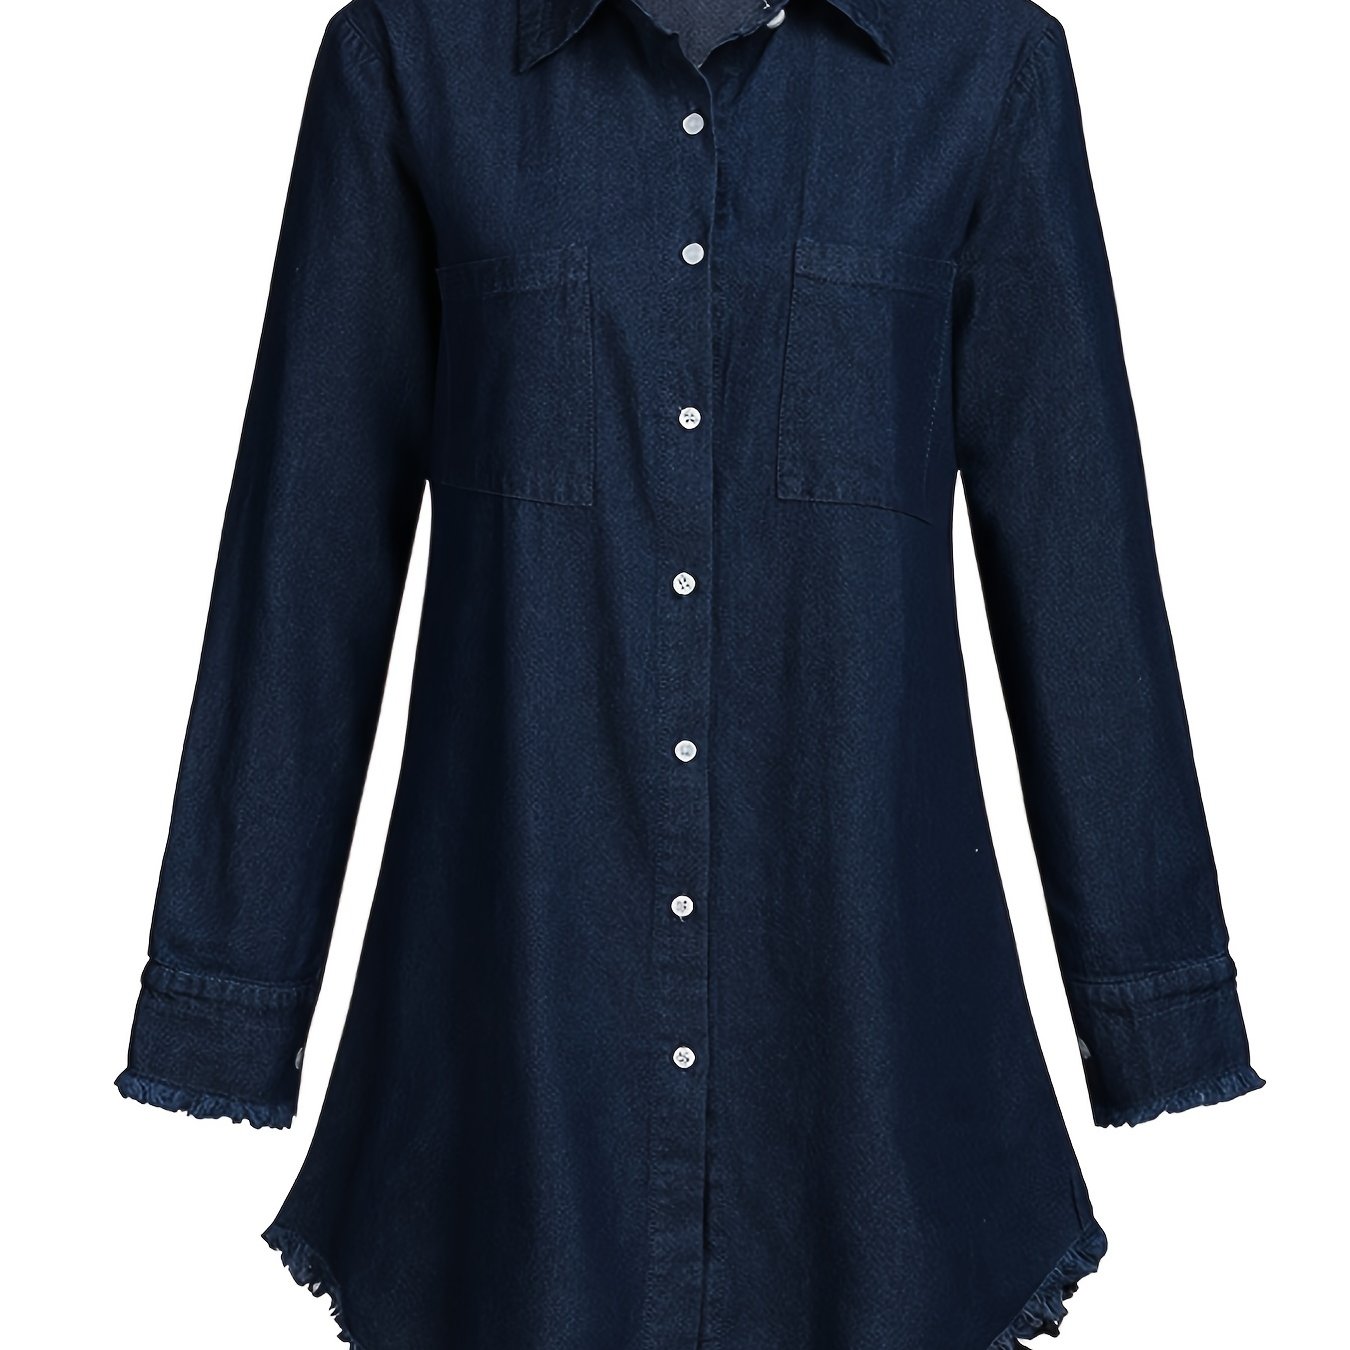 Lovevop-Raw Hem Long Sleeves Denim Shirt, Single-Breasted Button Patched Pockets Lapel Denim Shirt, Women's Denim Clothing